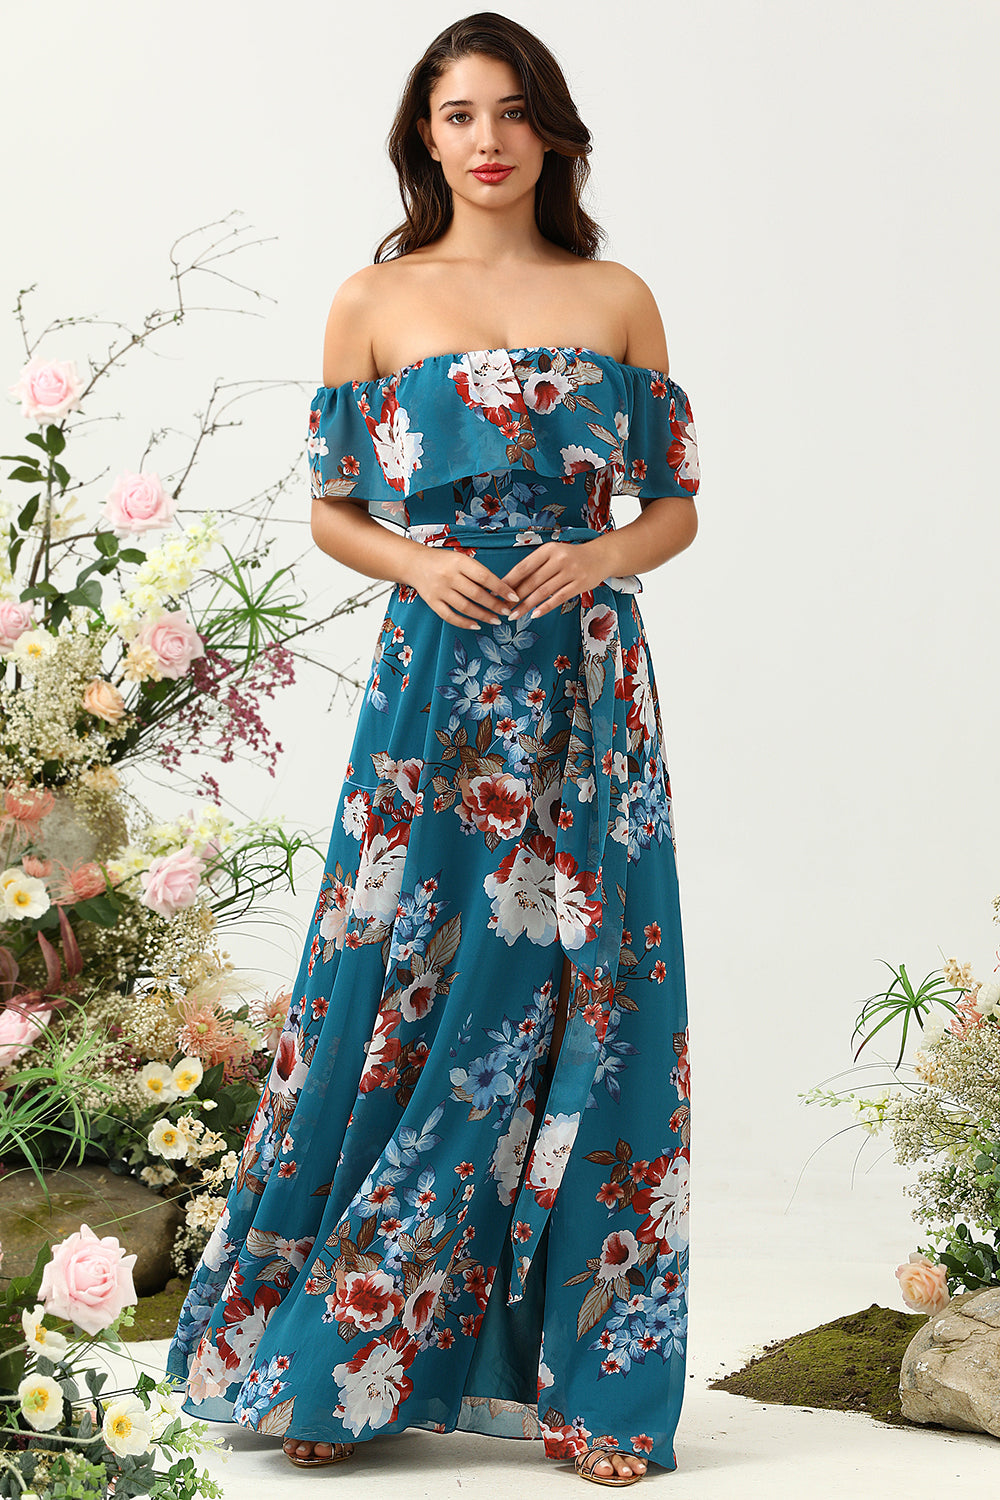 Dark Blue A Line Off The Shoulder Floral Print Chiffon Bridesmaid Dress